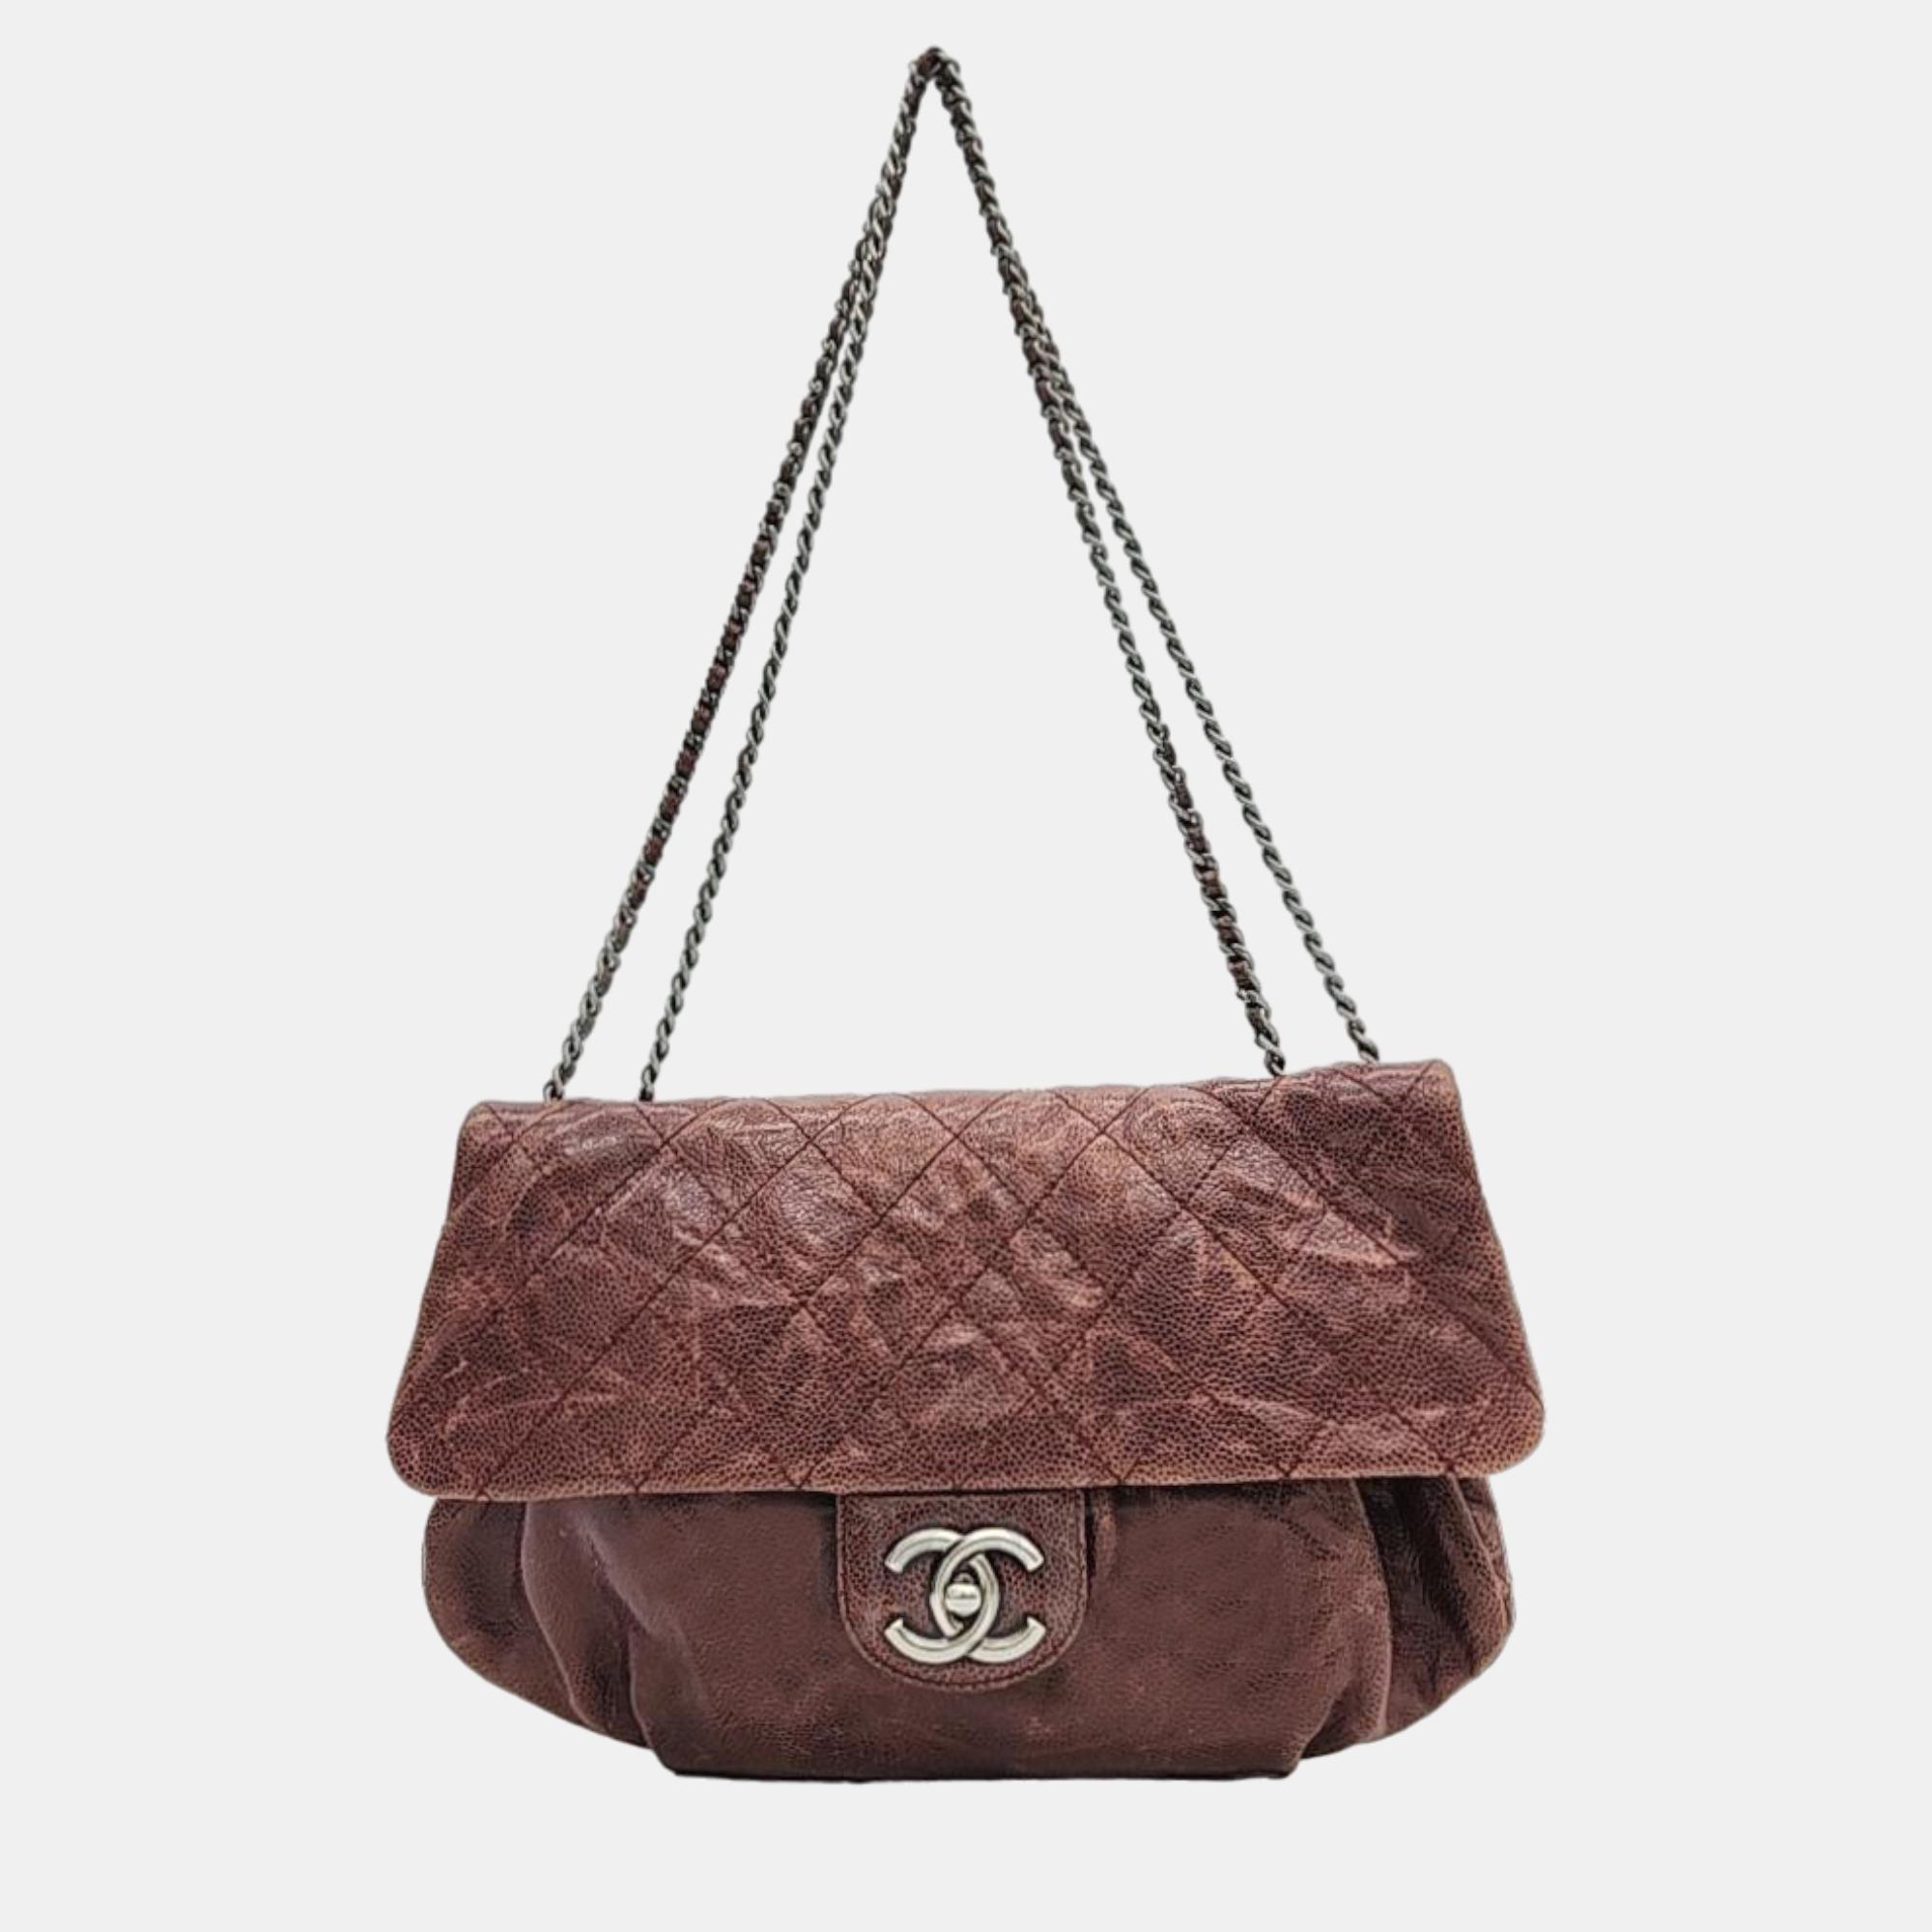 Chanel burgundy leather elastic cc flap bag